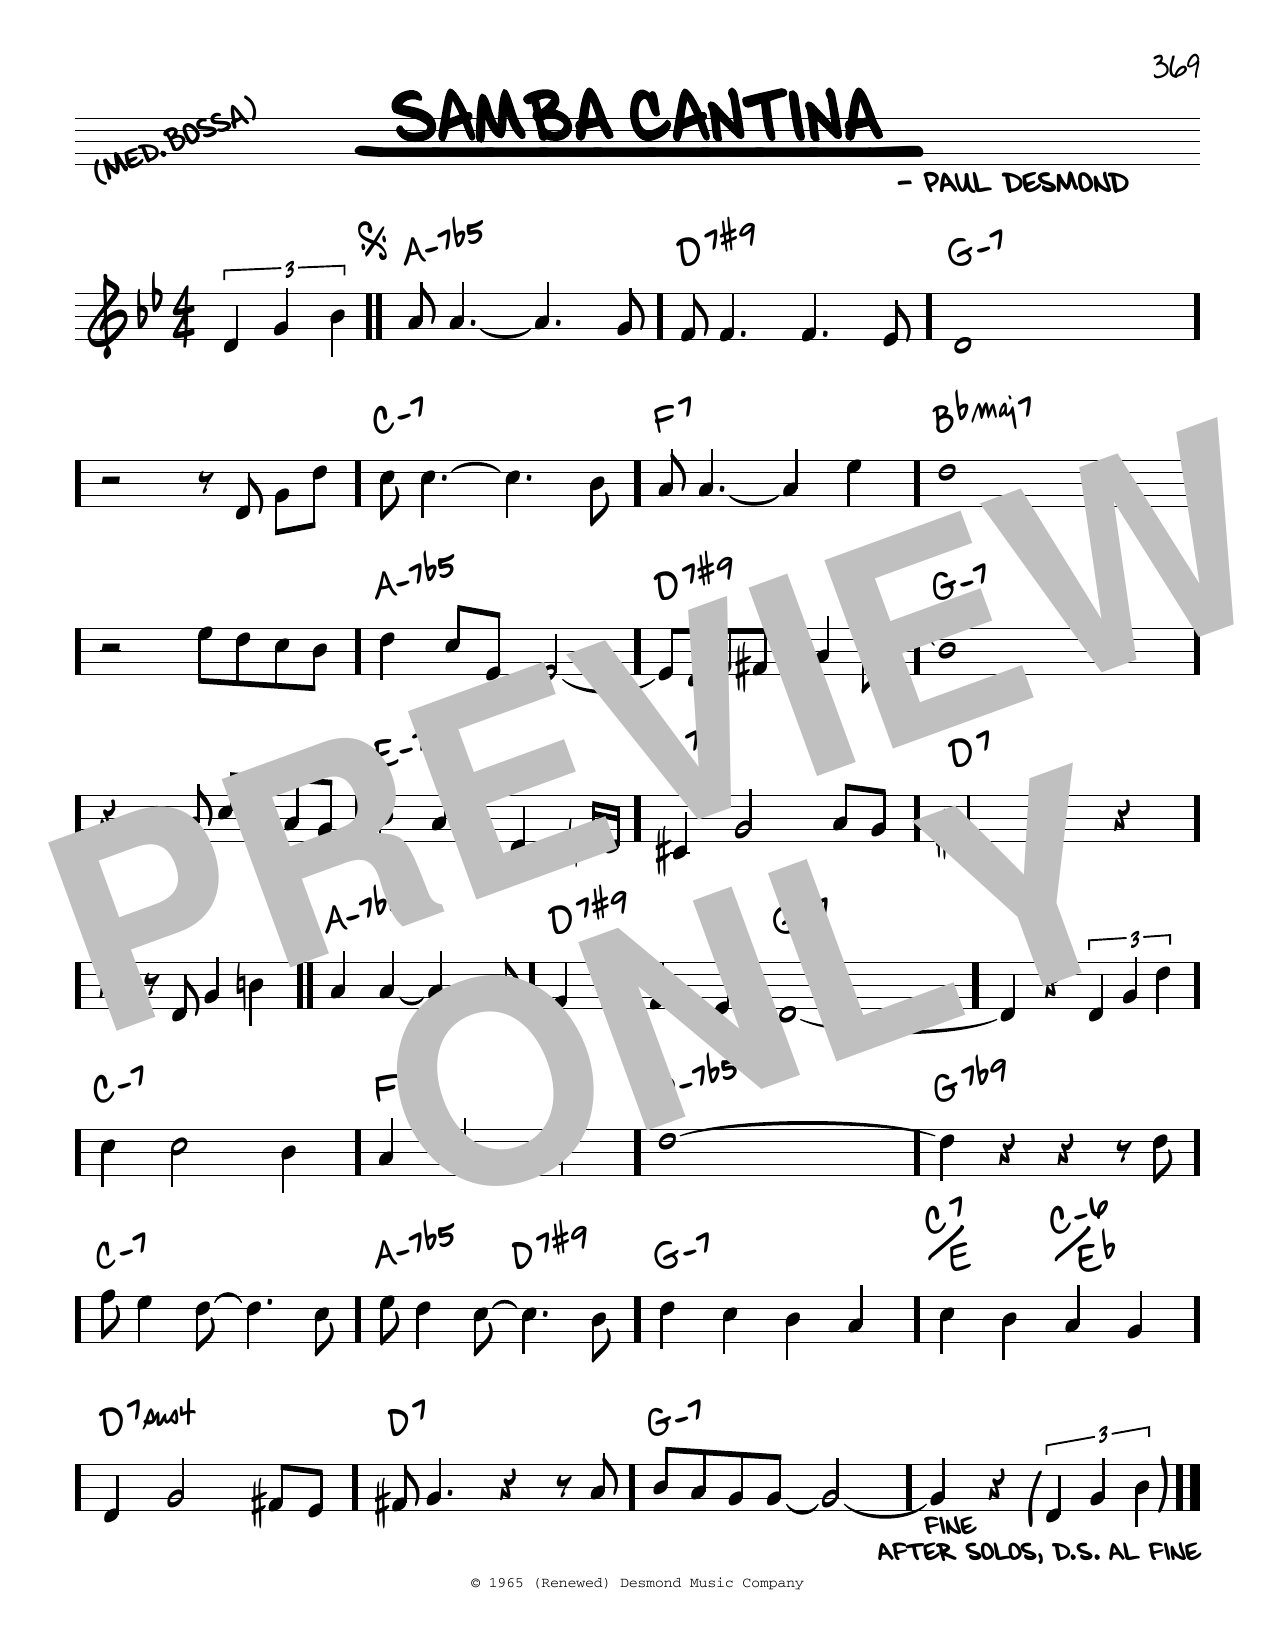 Paul Desmond Samba Cantina Sheet Music Notes & Chords for Real Book – Melody & Chords - Download or Print PDF